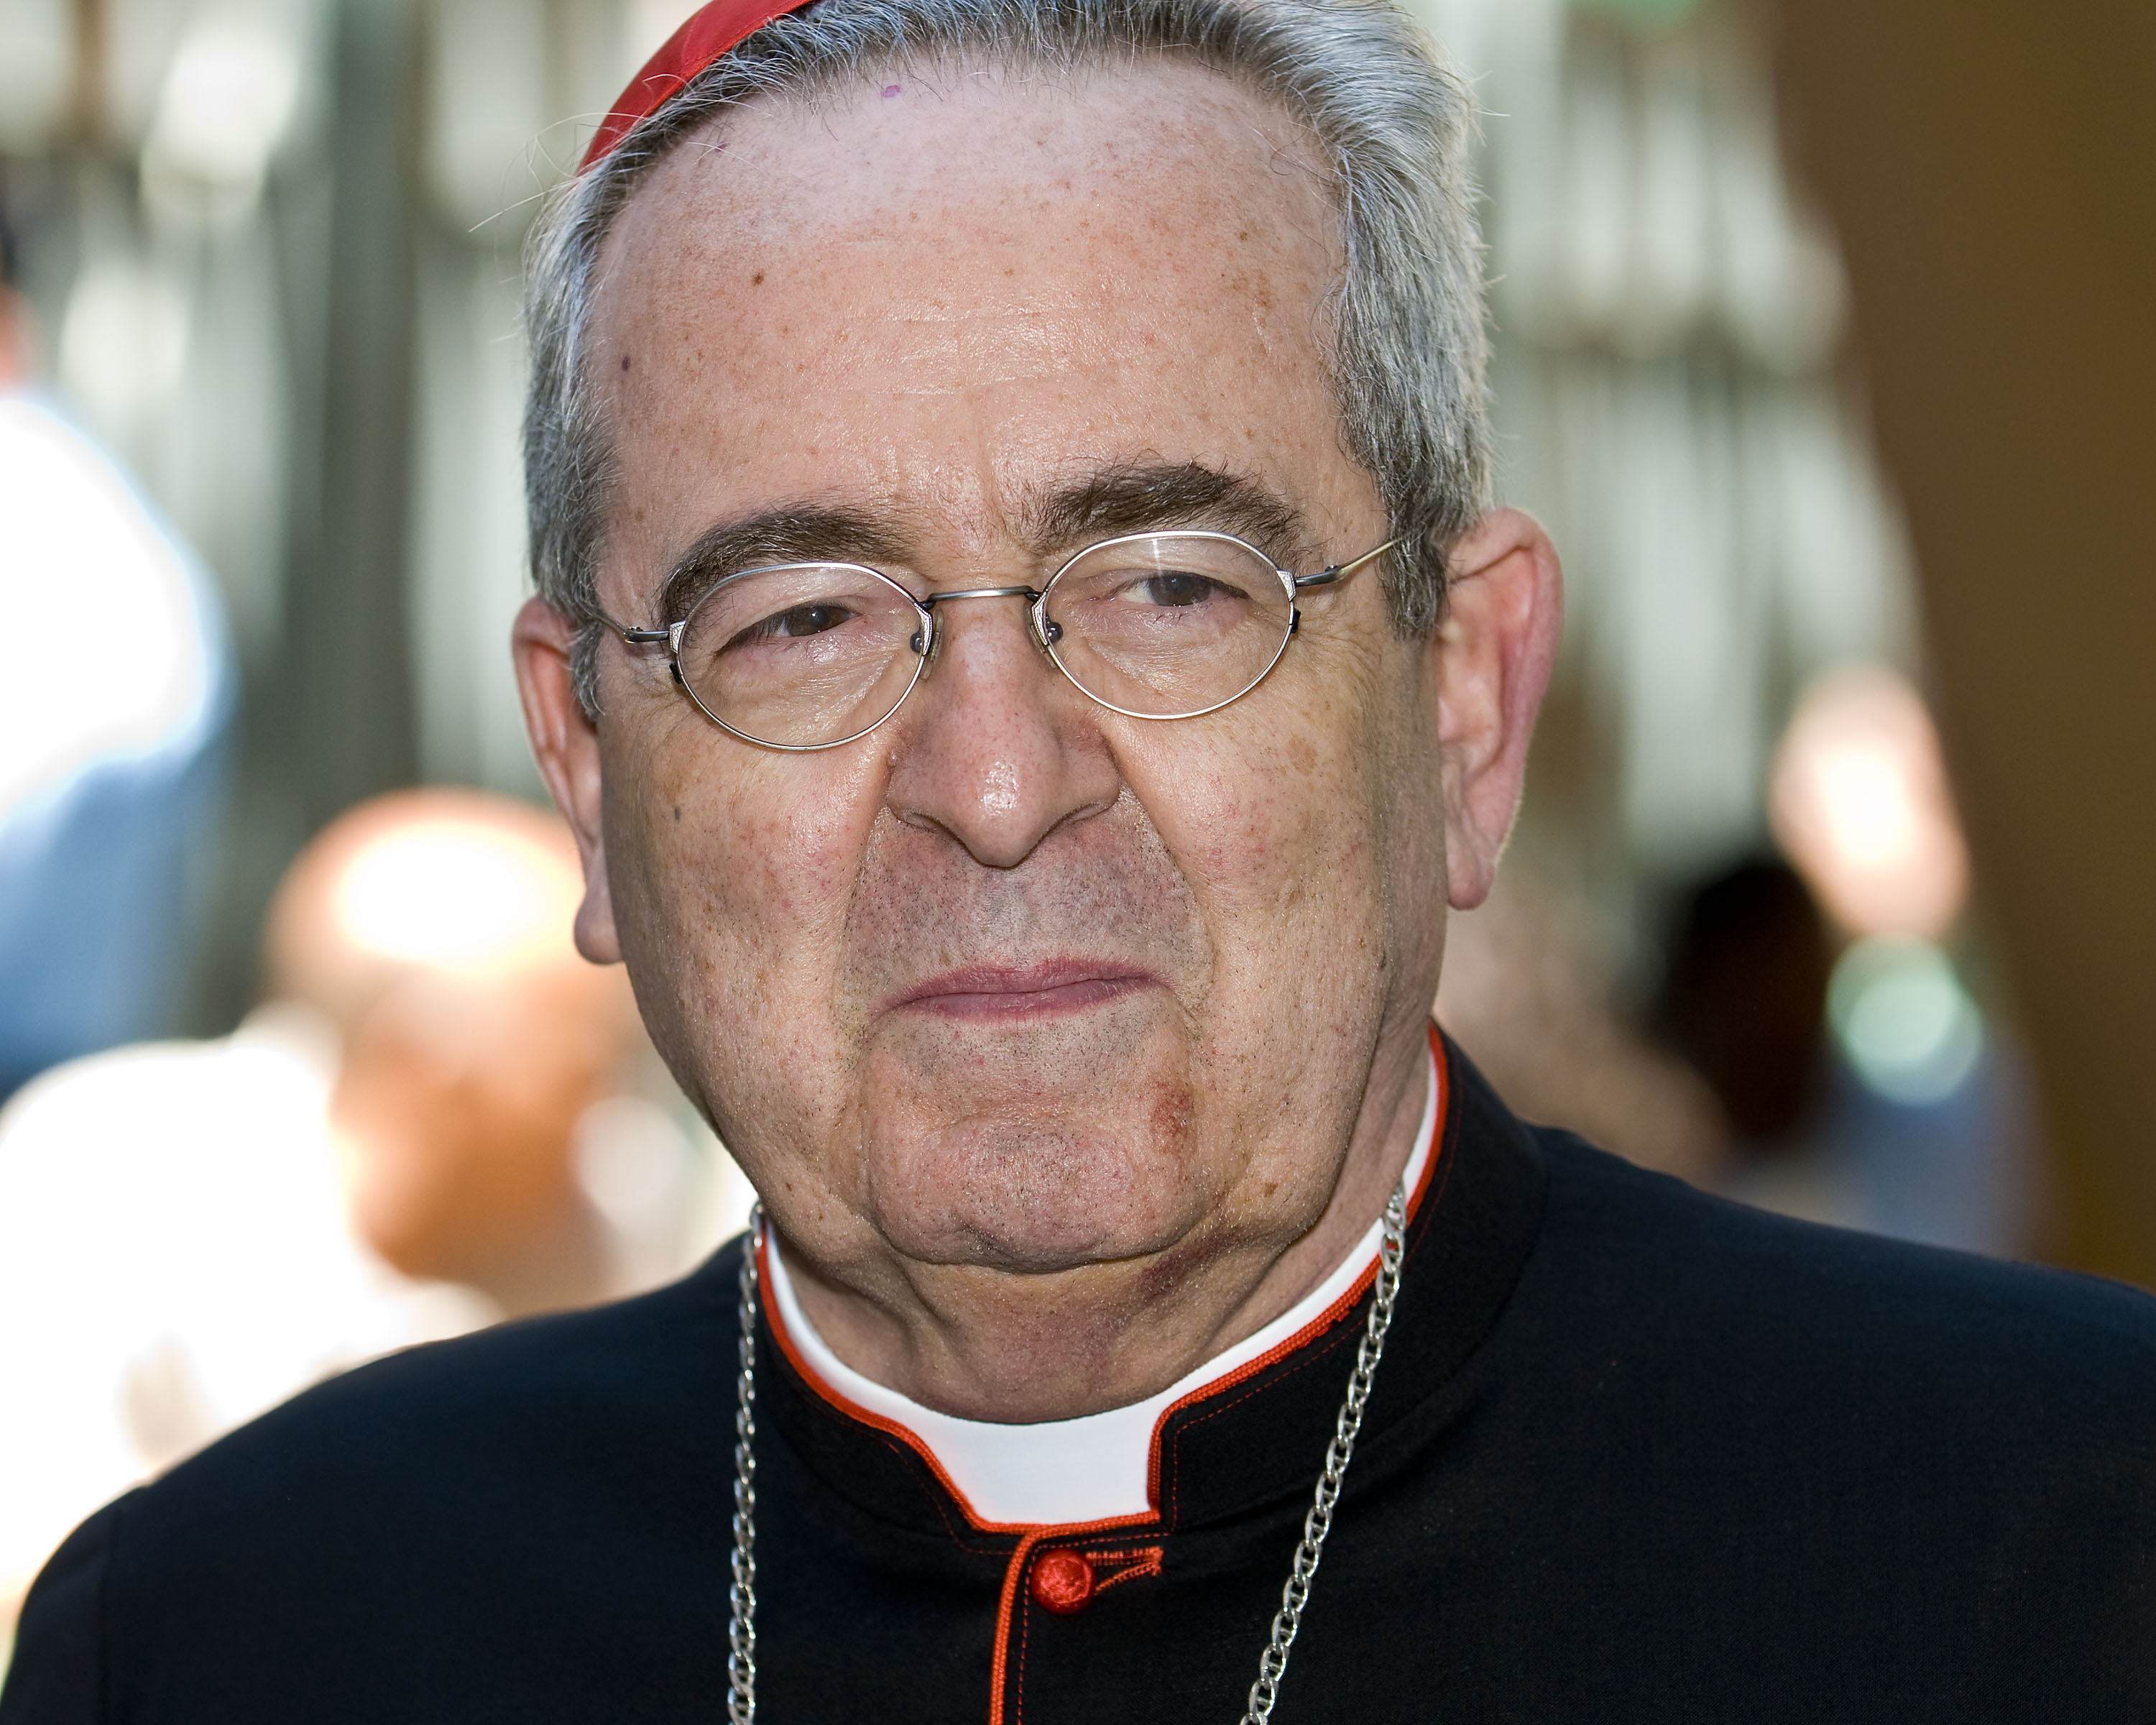 file photo: Cardinal Justin Rigali (Photo Jeff Fusco/Getty Images)